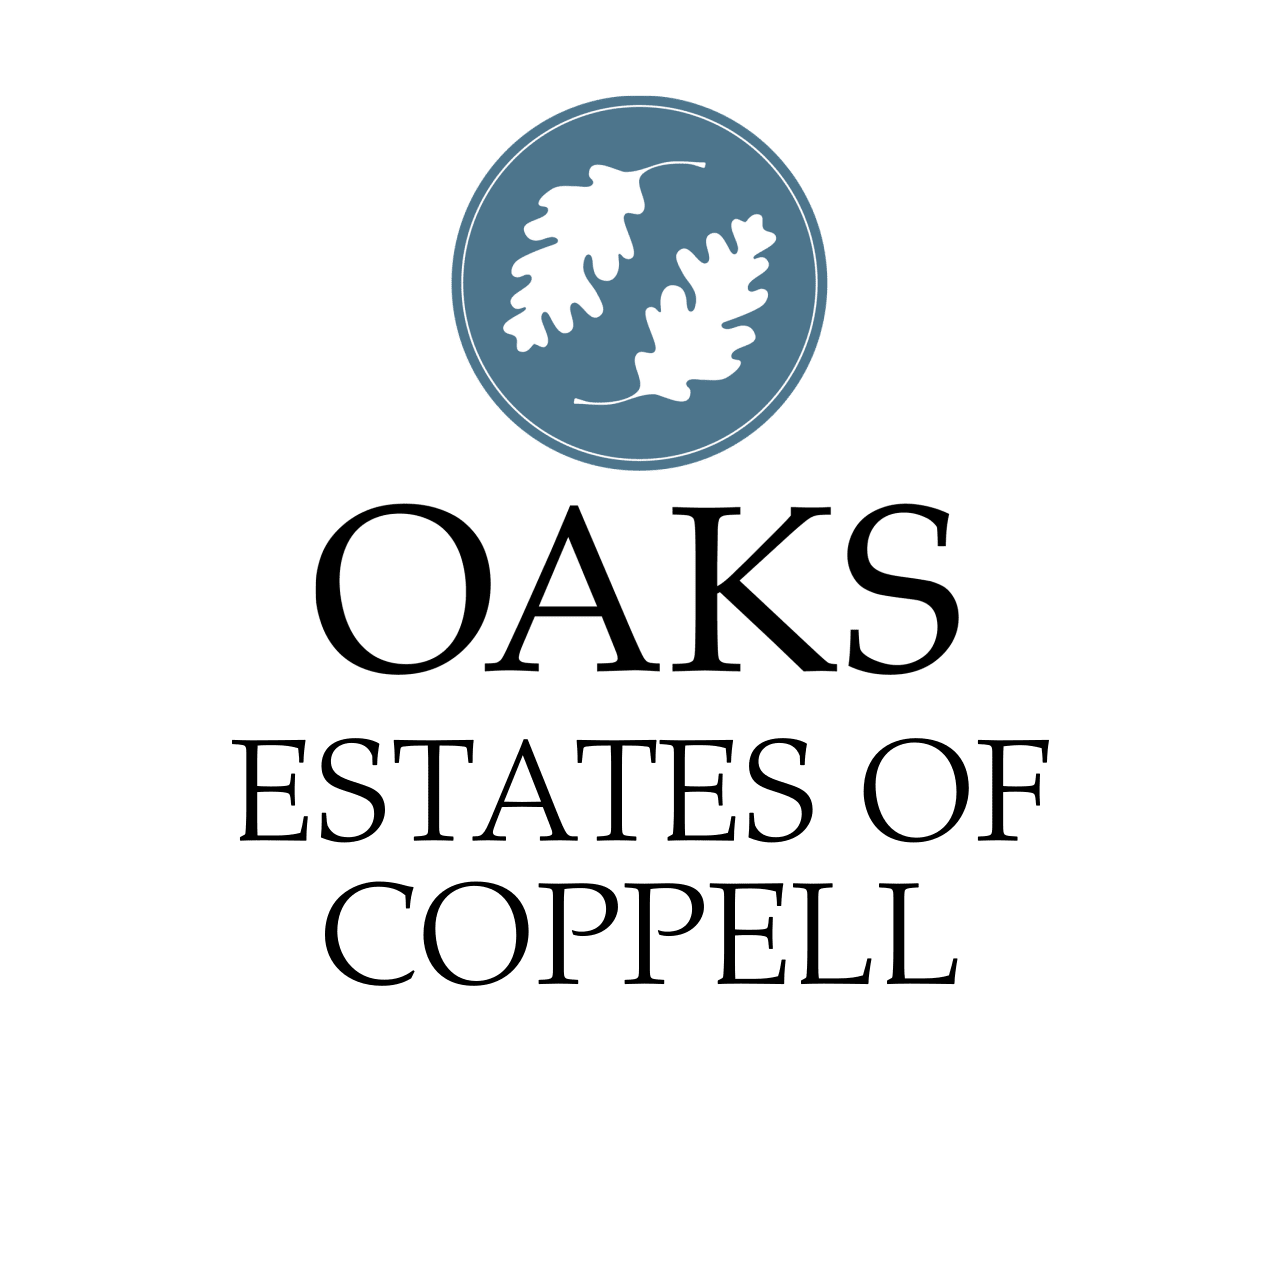 Oaks Estates of Coppell